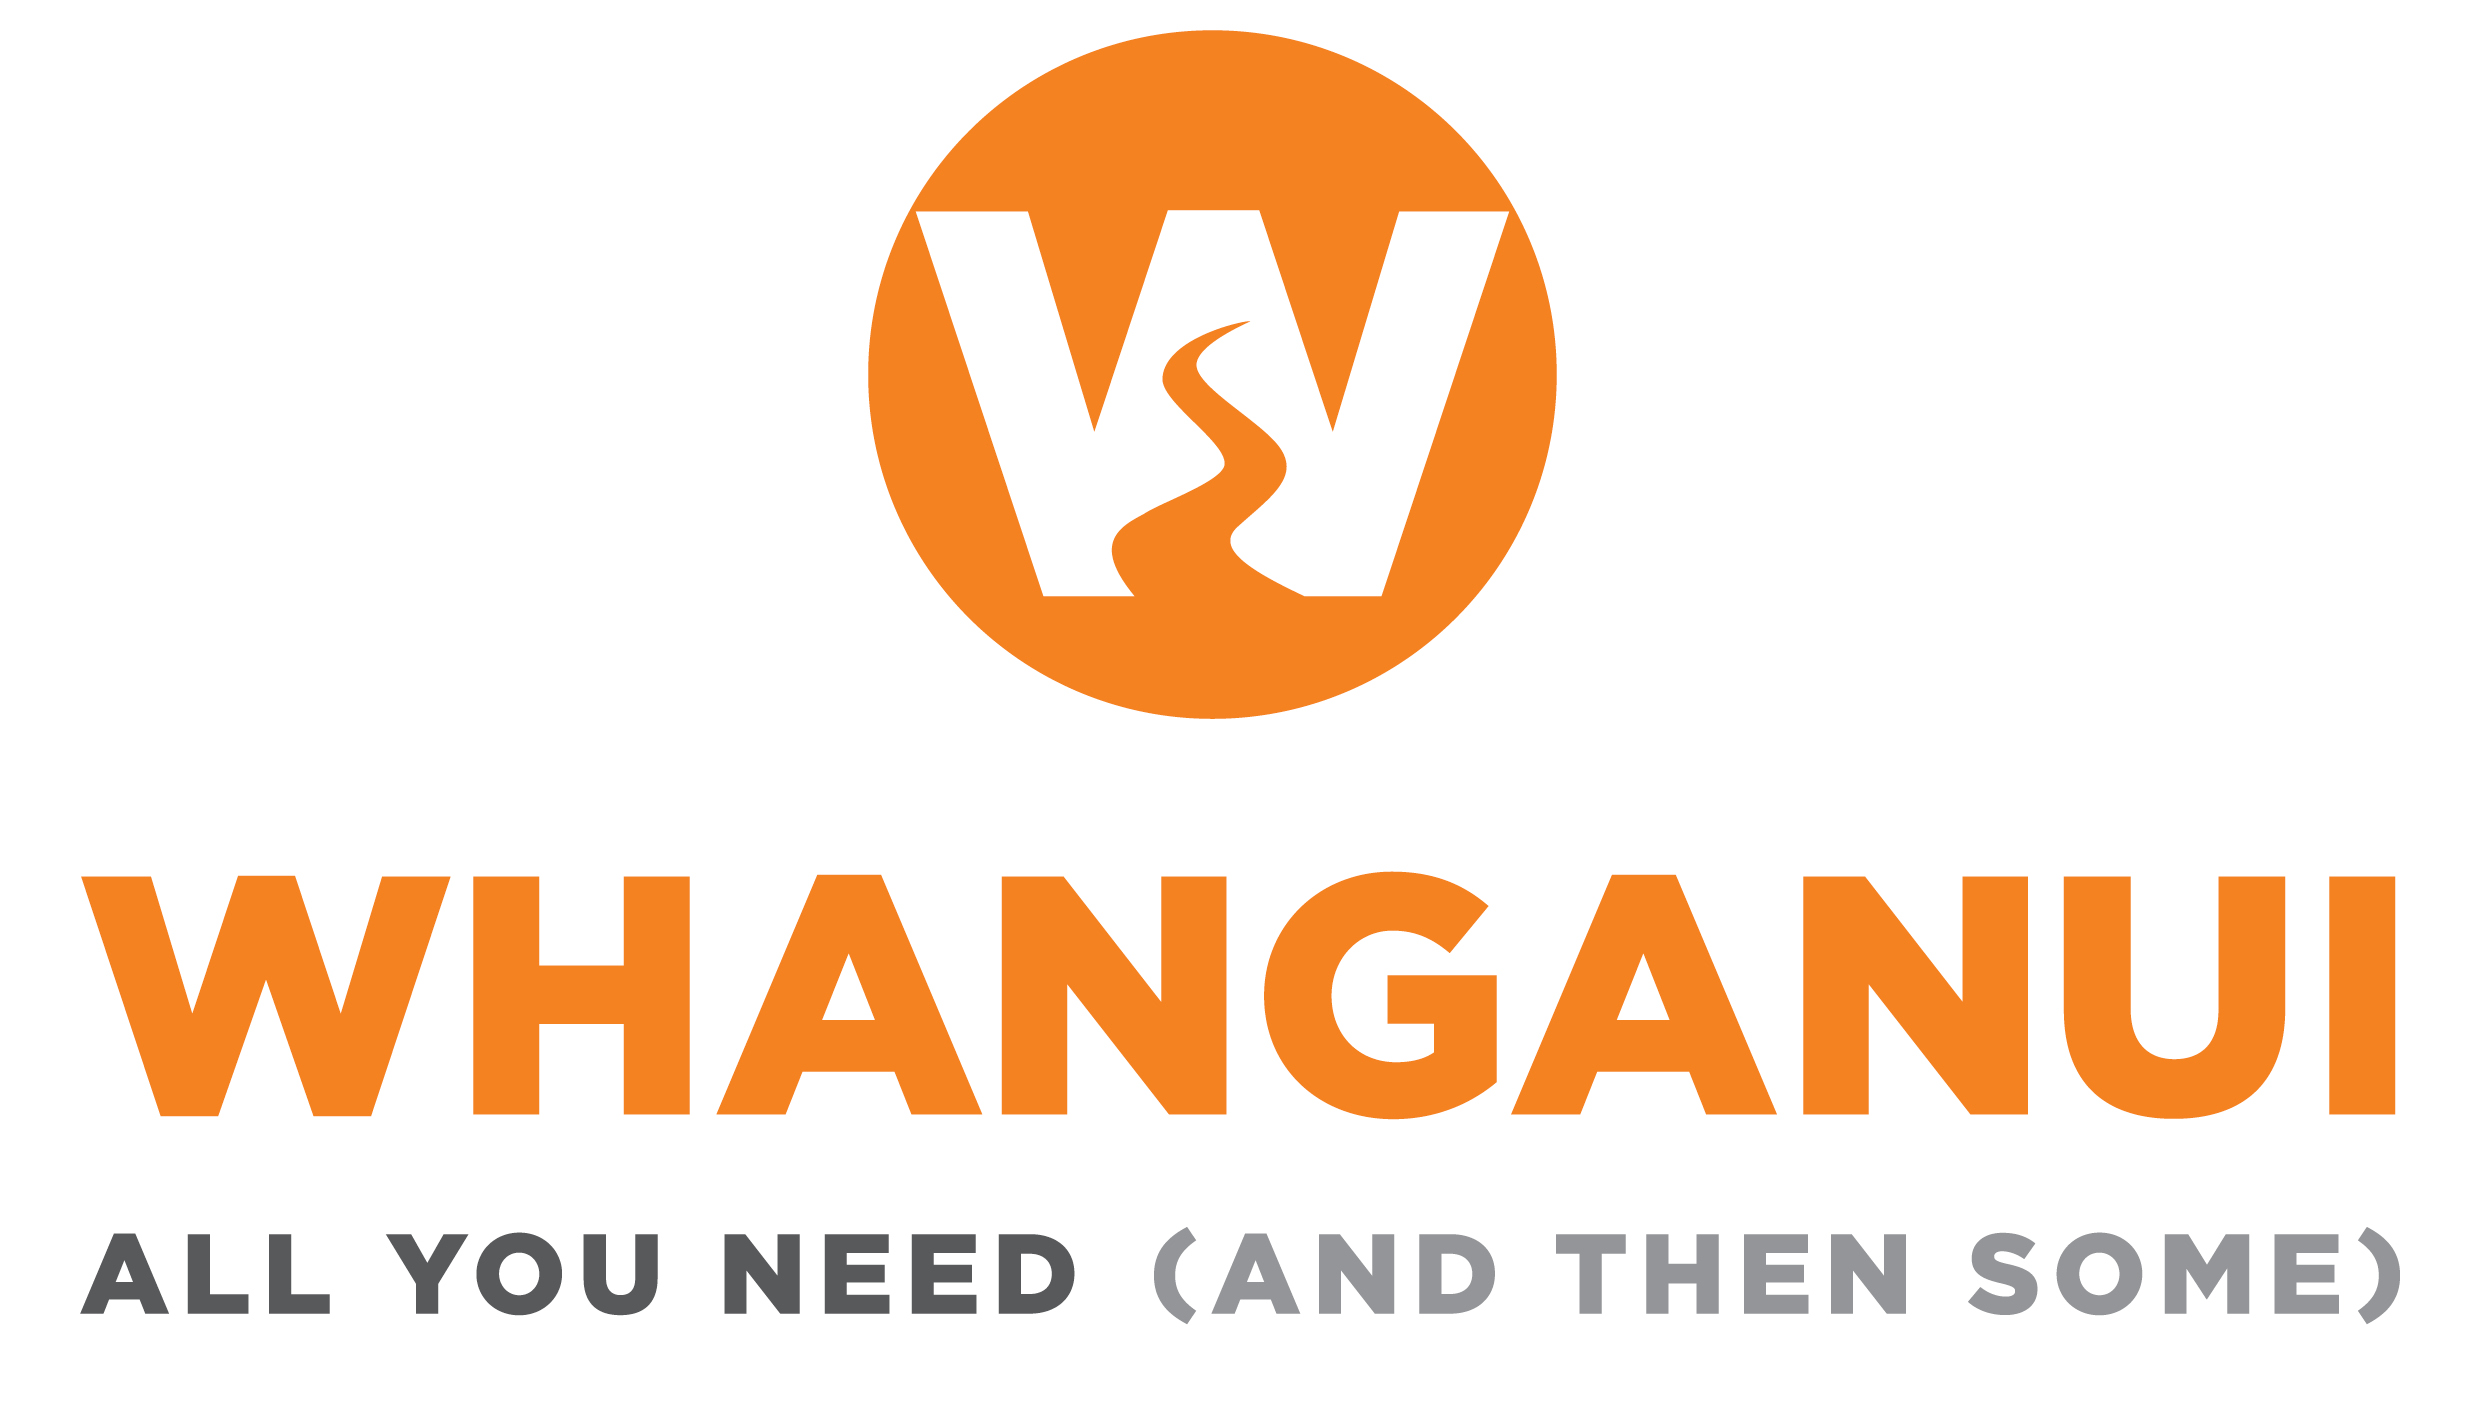 
Visit Whanganui